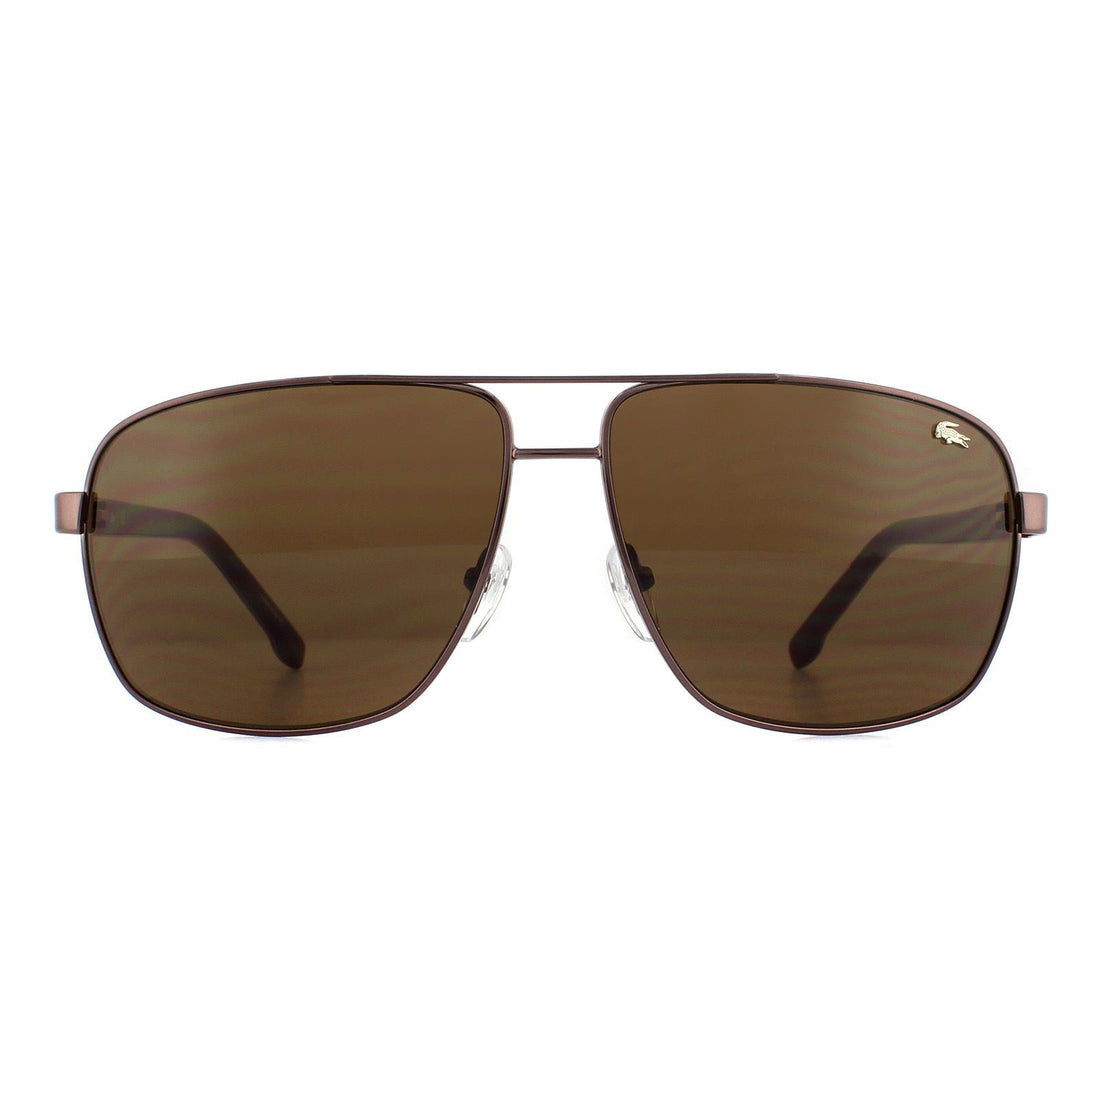 Buy Sunglasses LACOSTE L 222 SG 714 Gold Online India | Ubuy